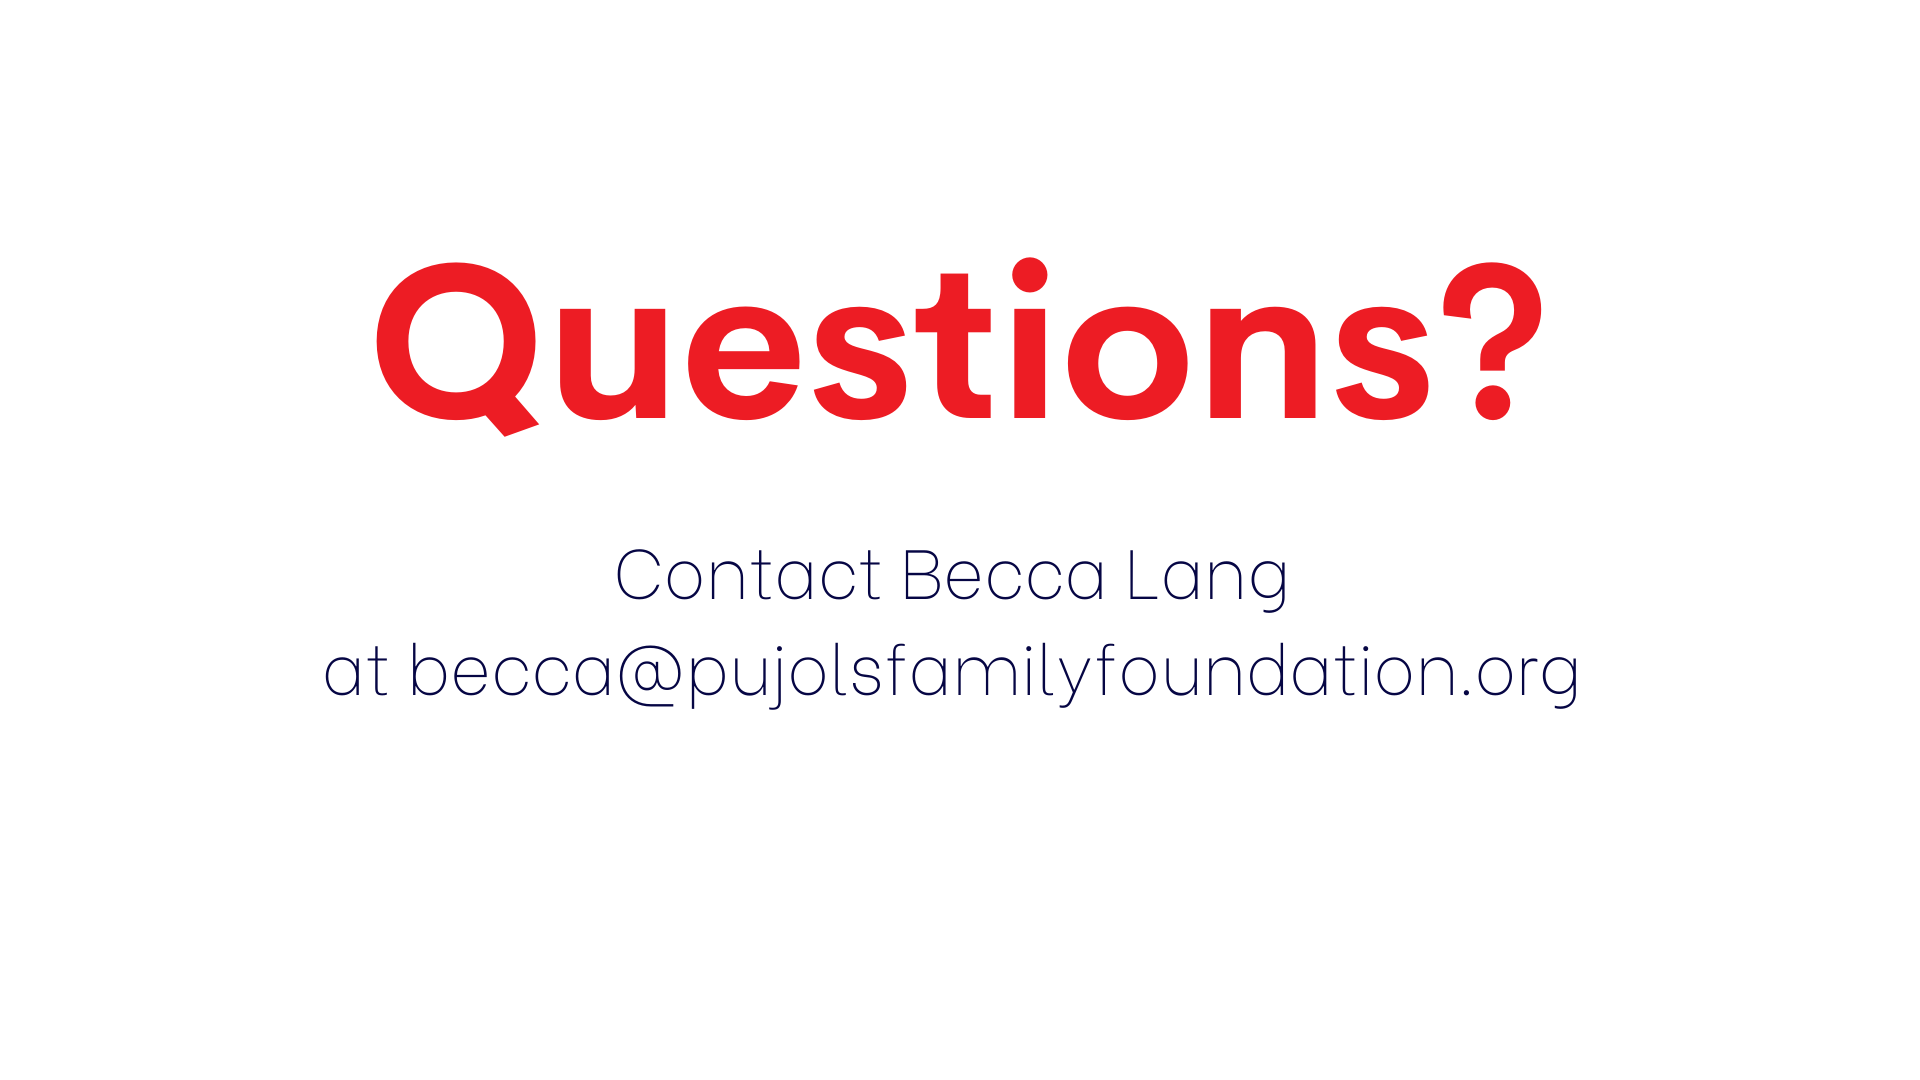 Contact Becca Lang at becca@pujolsfamilyfoundation.org.png